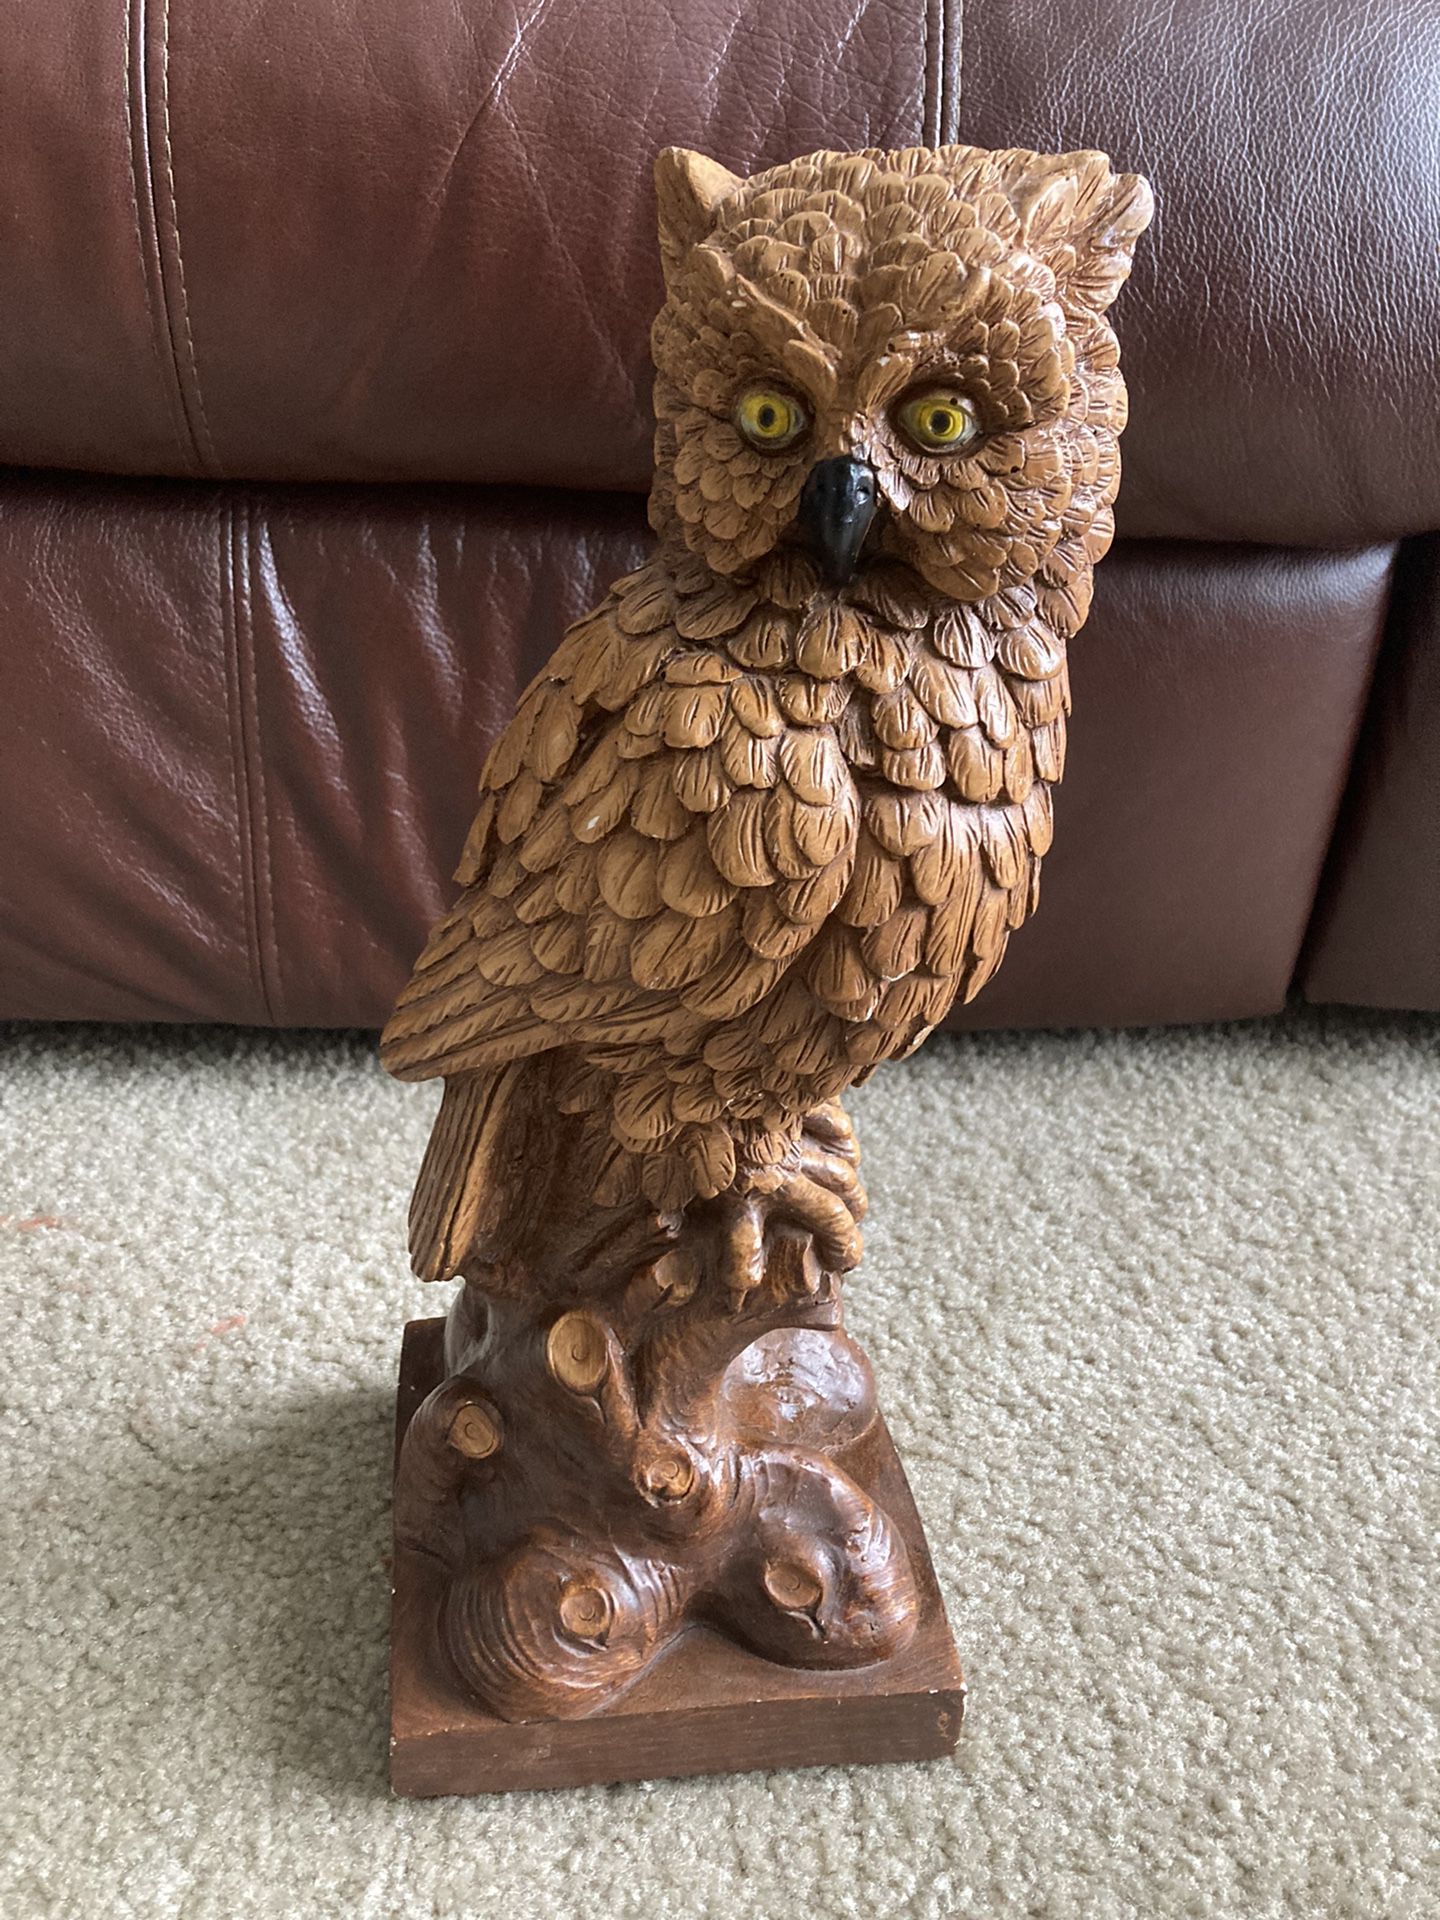 14” Owl Statue Figurine Art Home Decor Sculpture Wood Hand Carved